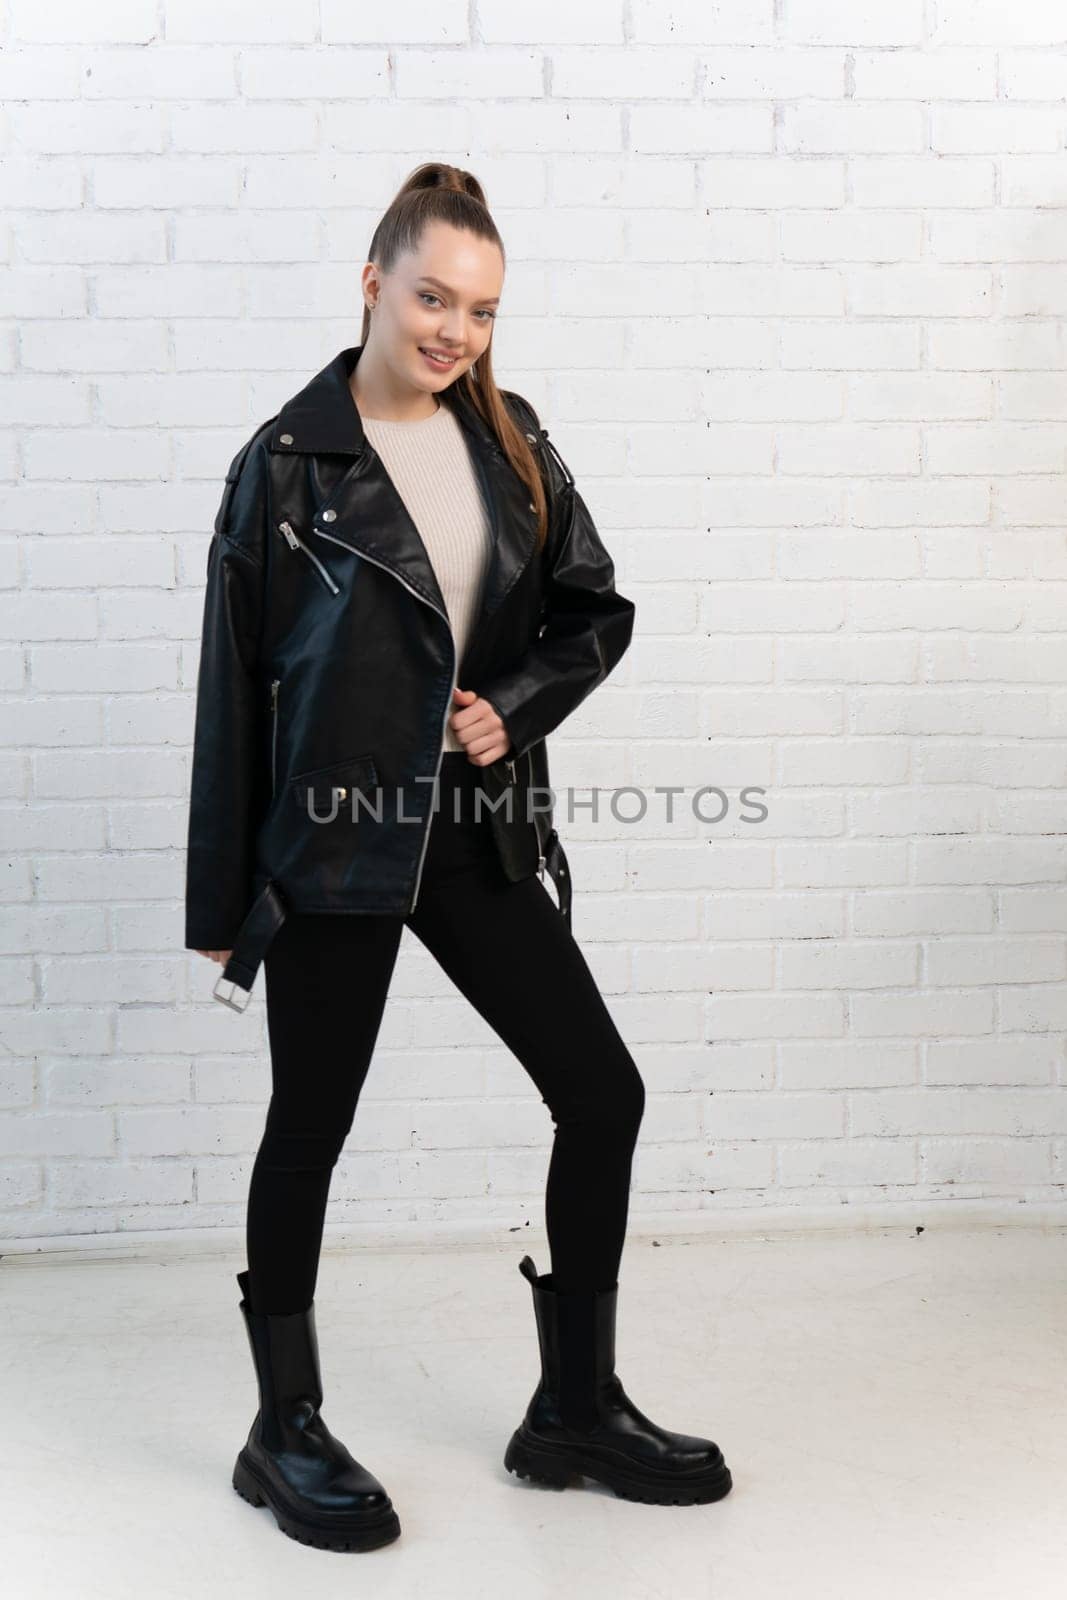 background jacket design fashion casual leather style black zipper isolated clothes white clothing